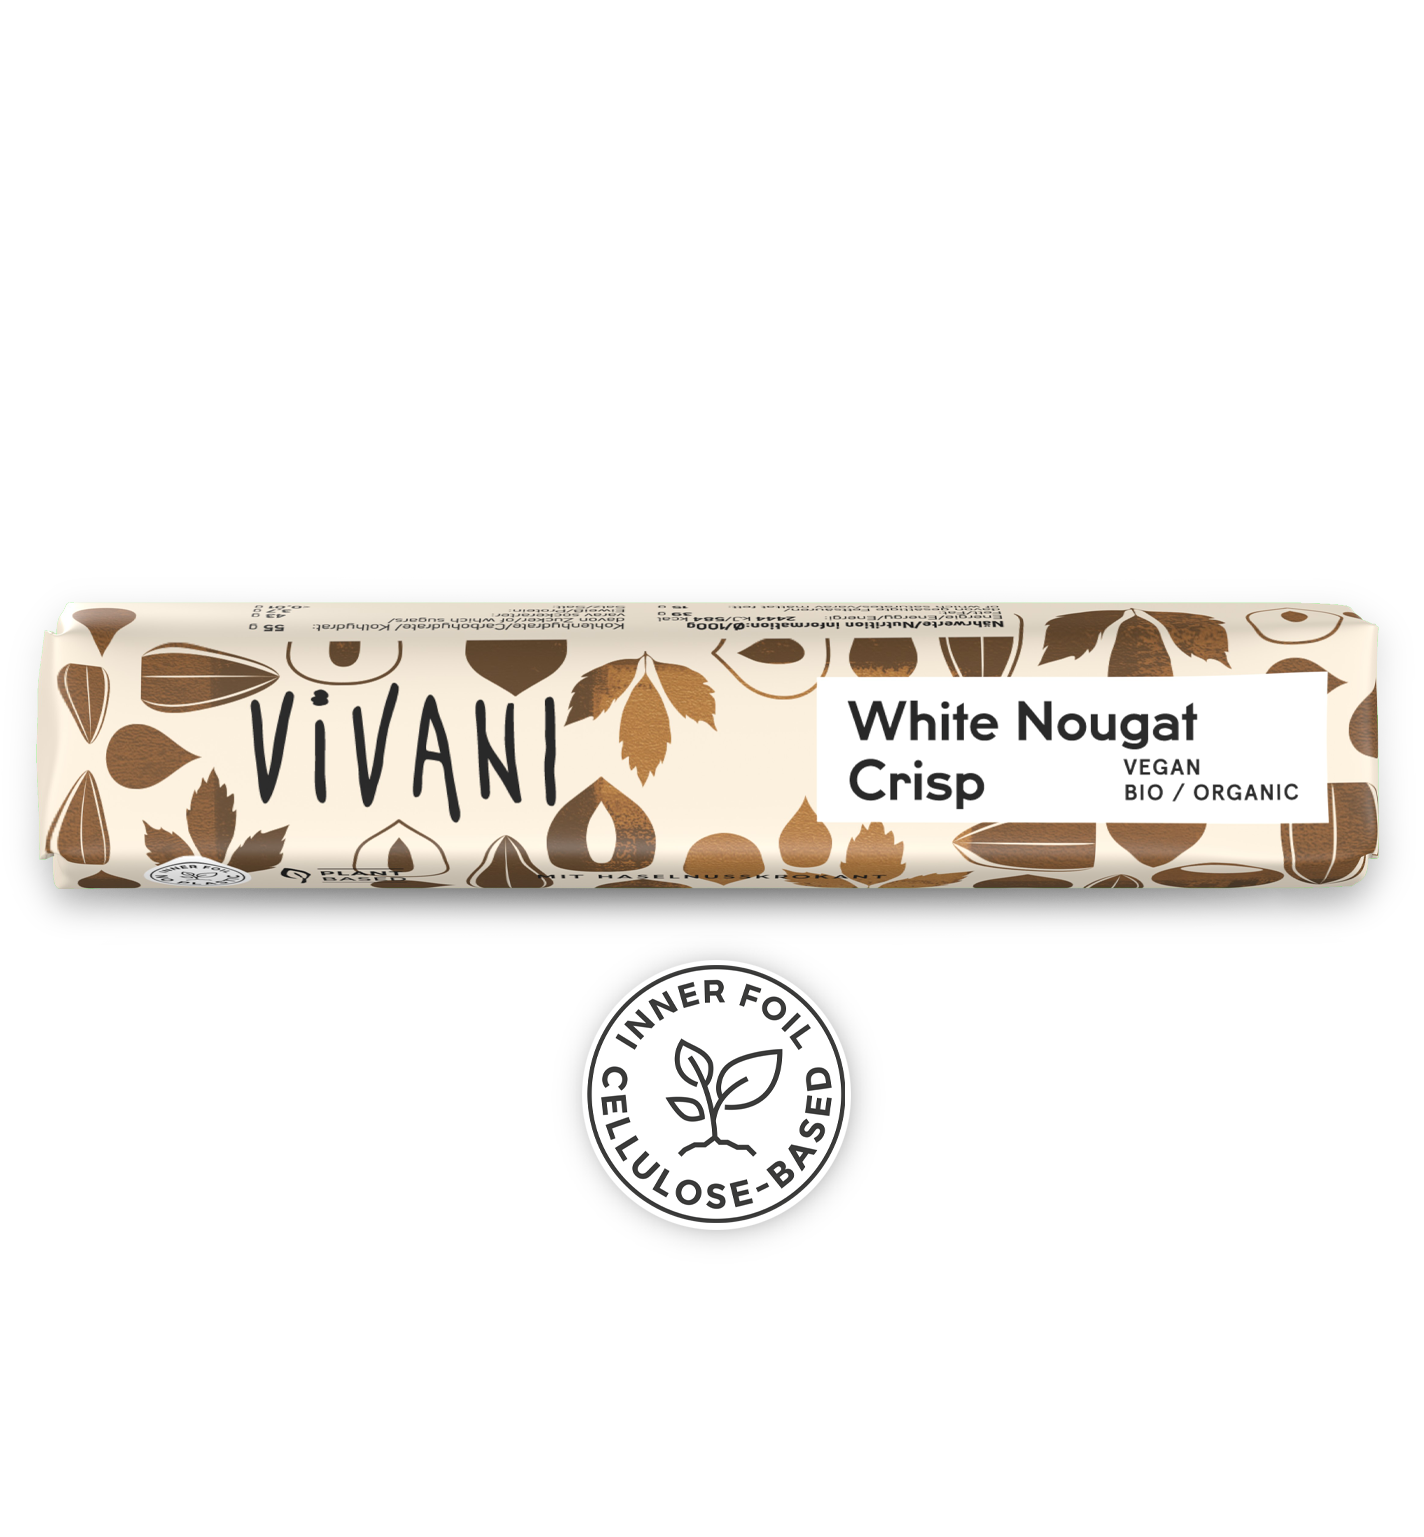 VIVANI's organic and vegan chocolate bar White Nougat Crisp with crunchy hazelnut brittle